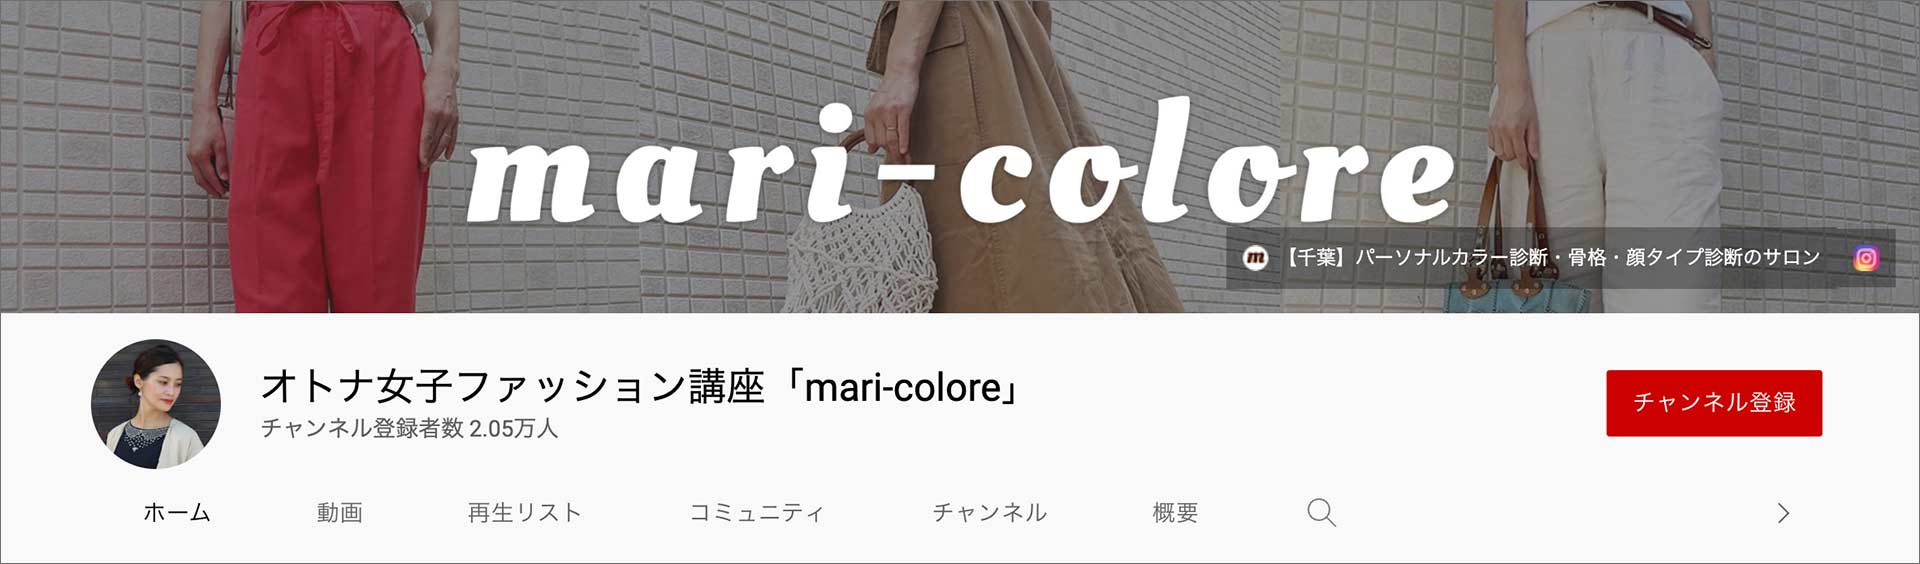 mari-colore,マリコローレ ,オトナ女子ファッション講座